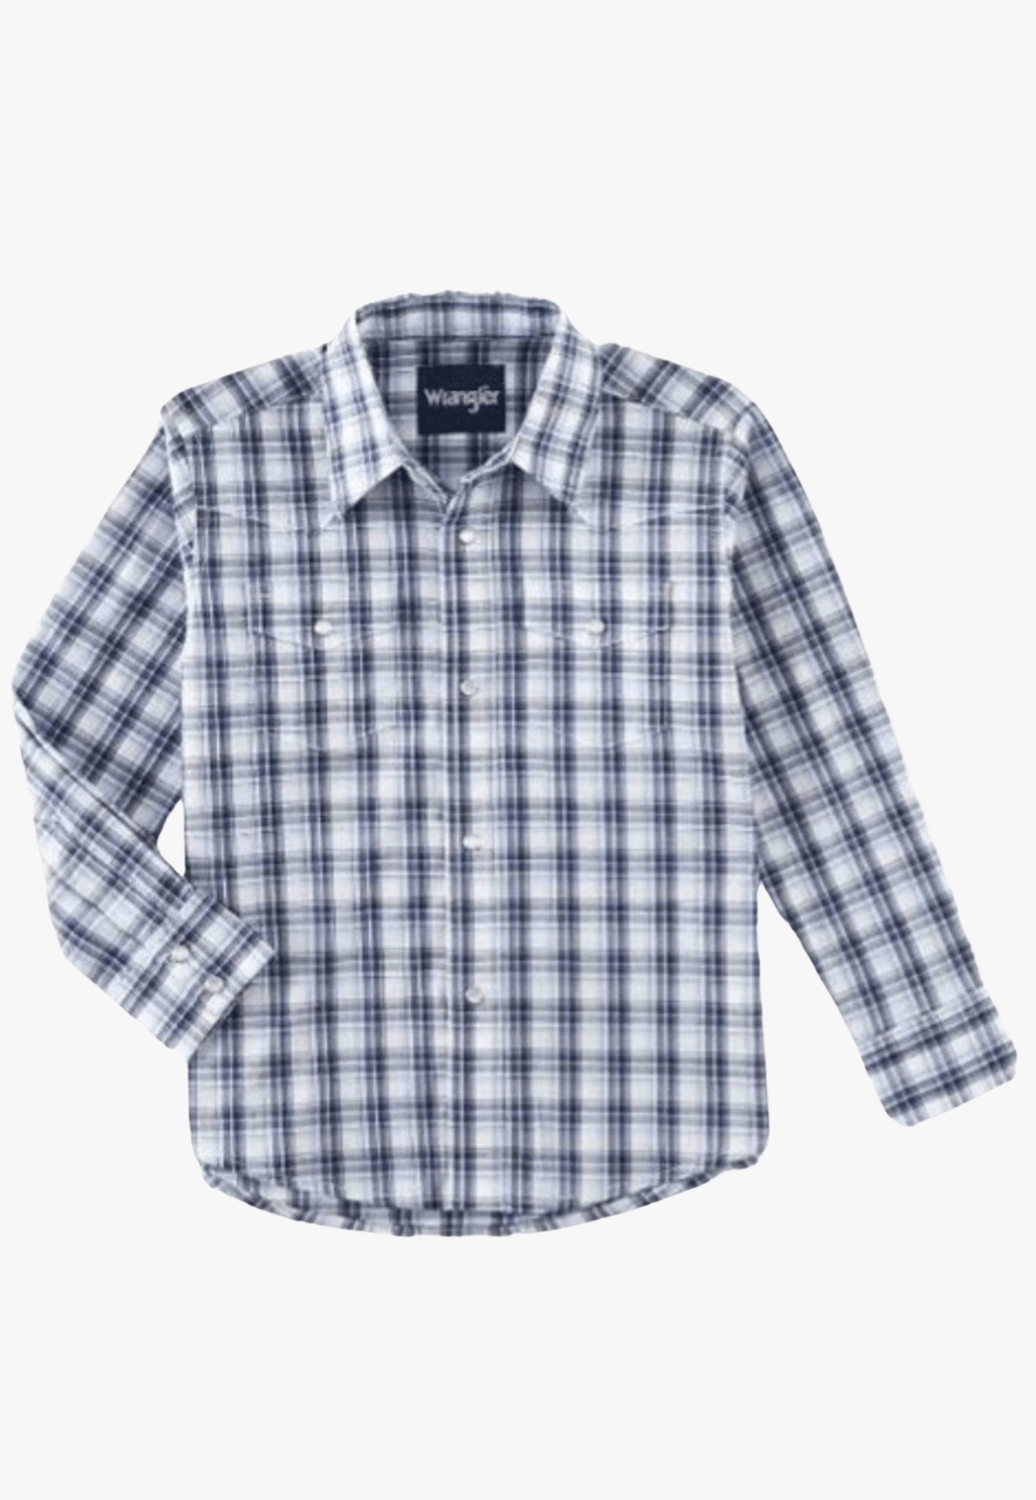 Wrangler Boys Wrinkle Resistant Long Sleeve Shirt - W. Titley & Co